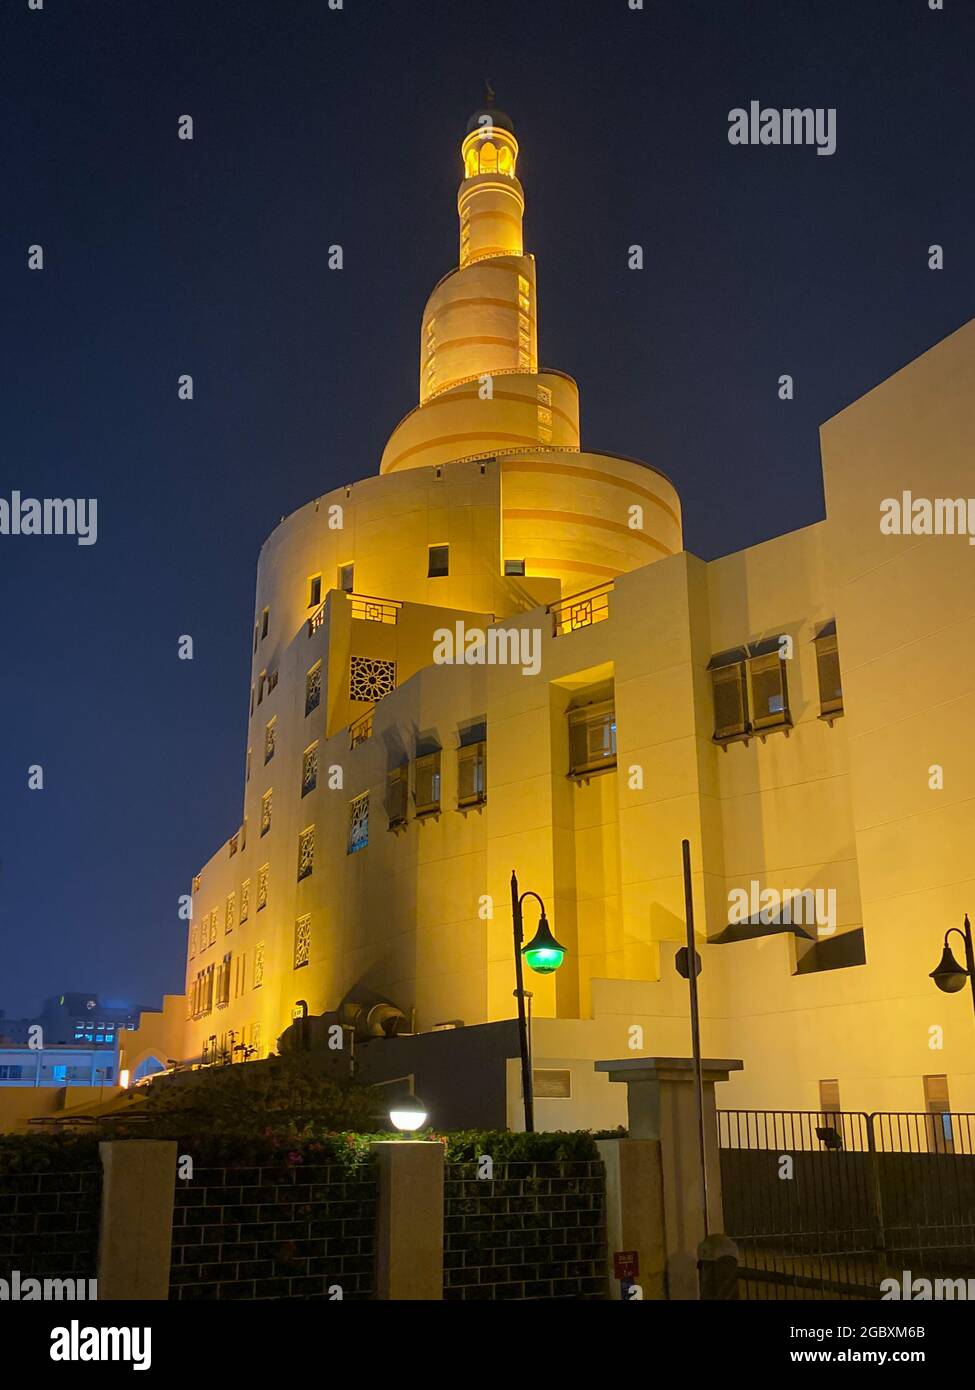 Beleuchtete Al Fanar – Turm im Qatar Islamic Cultural Center bei Nacht, Doha, Katar, Naher Osten gegen klaren dunklen Himmel Stockfoto